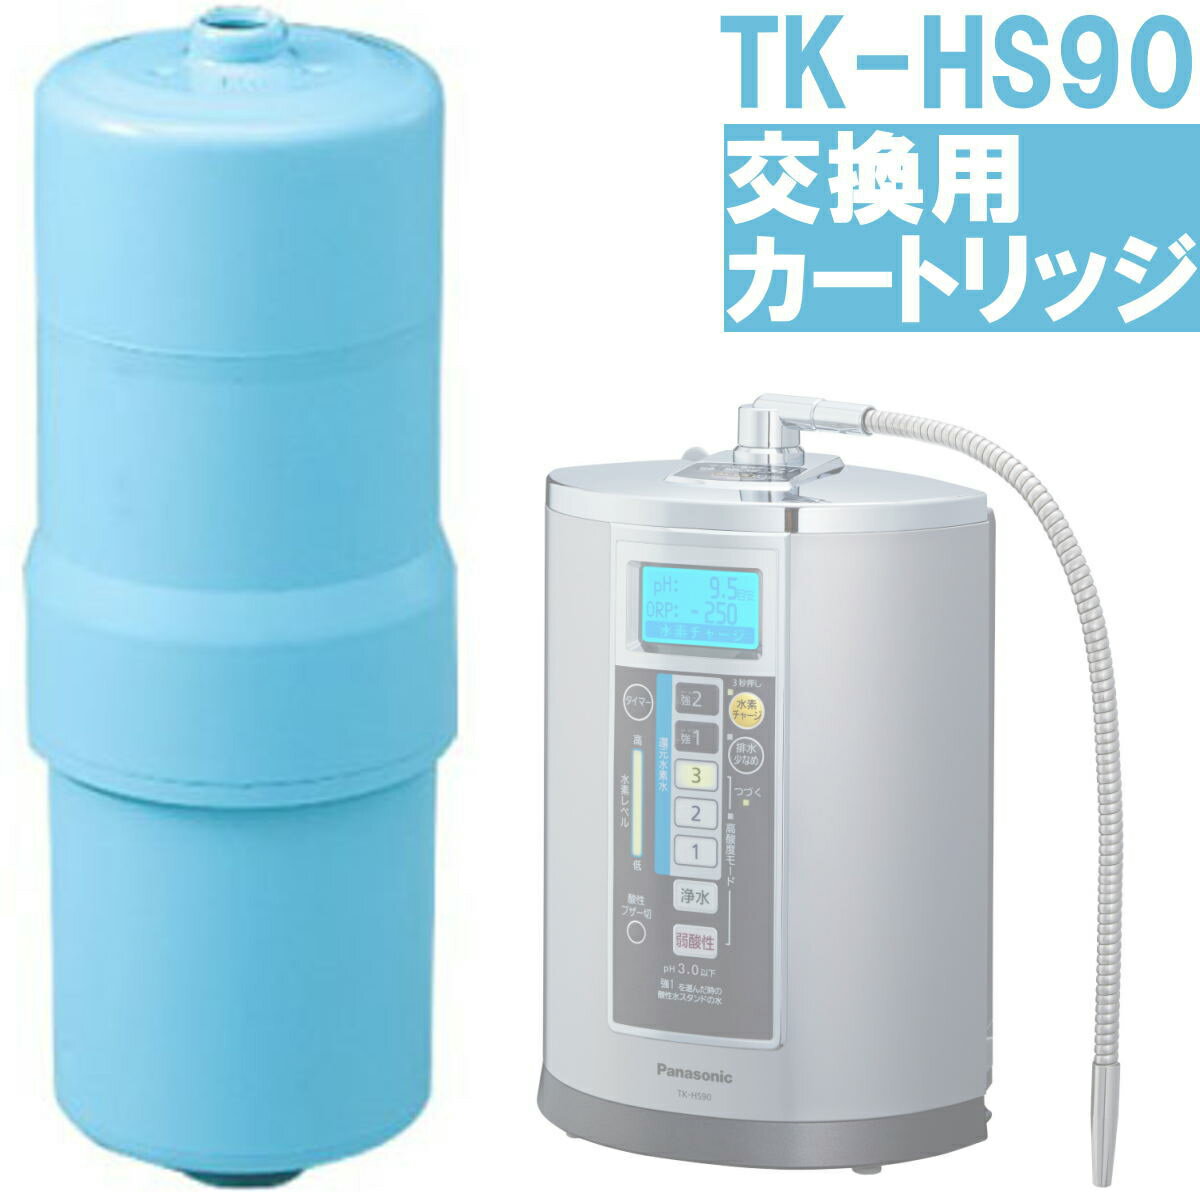 Panasonic 還元水素水生成器用カートリッジ | TK-HS90C1 | TK-HS…...:sakura002:10004544